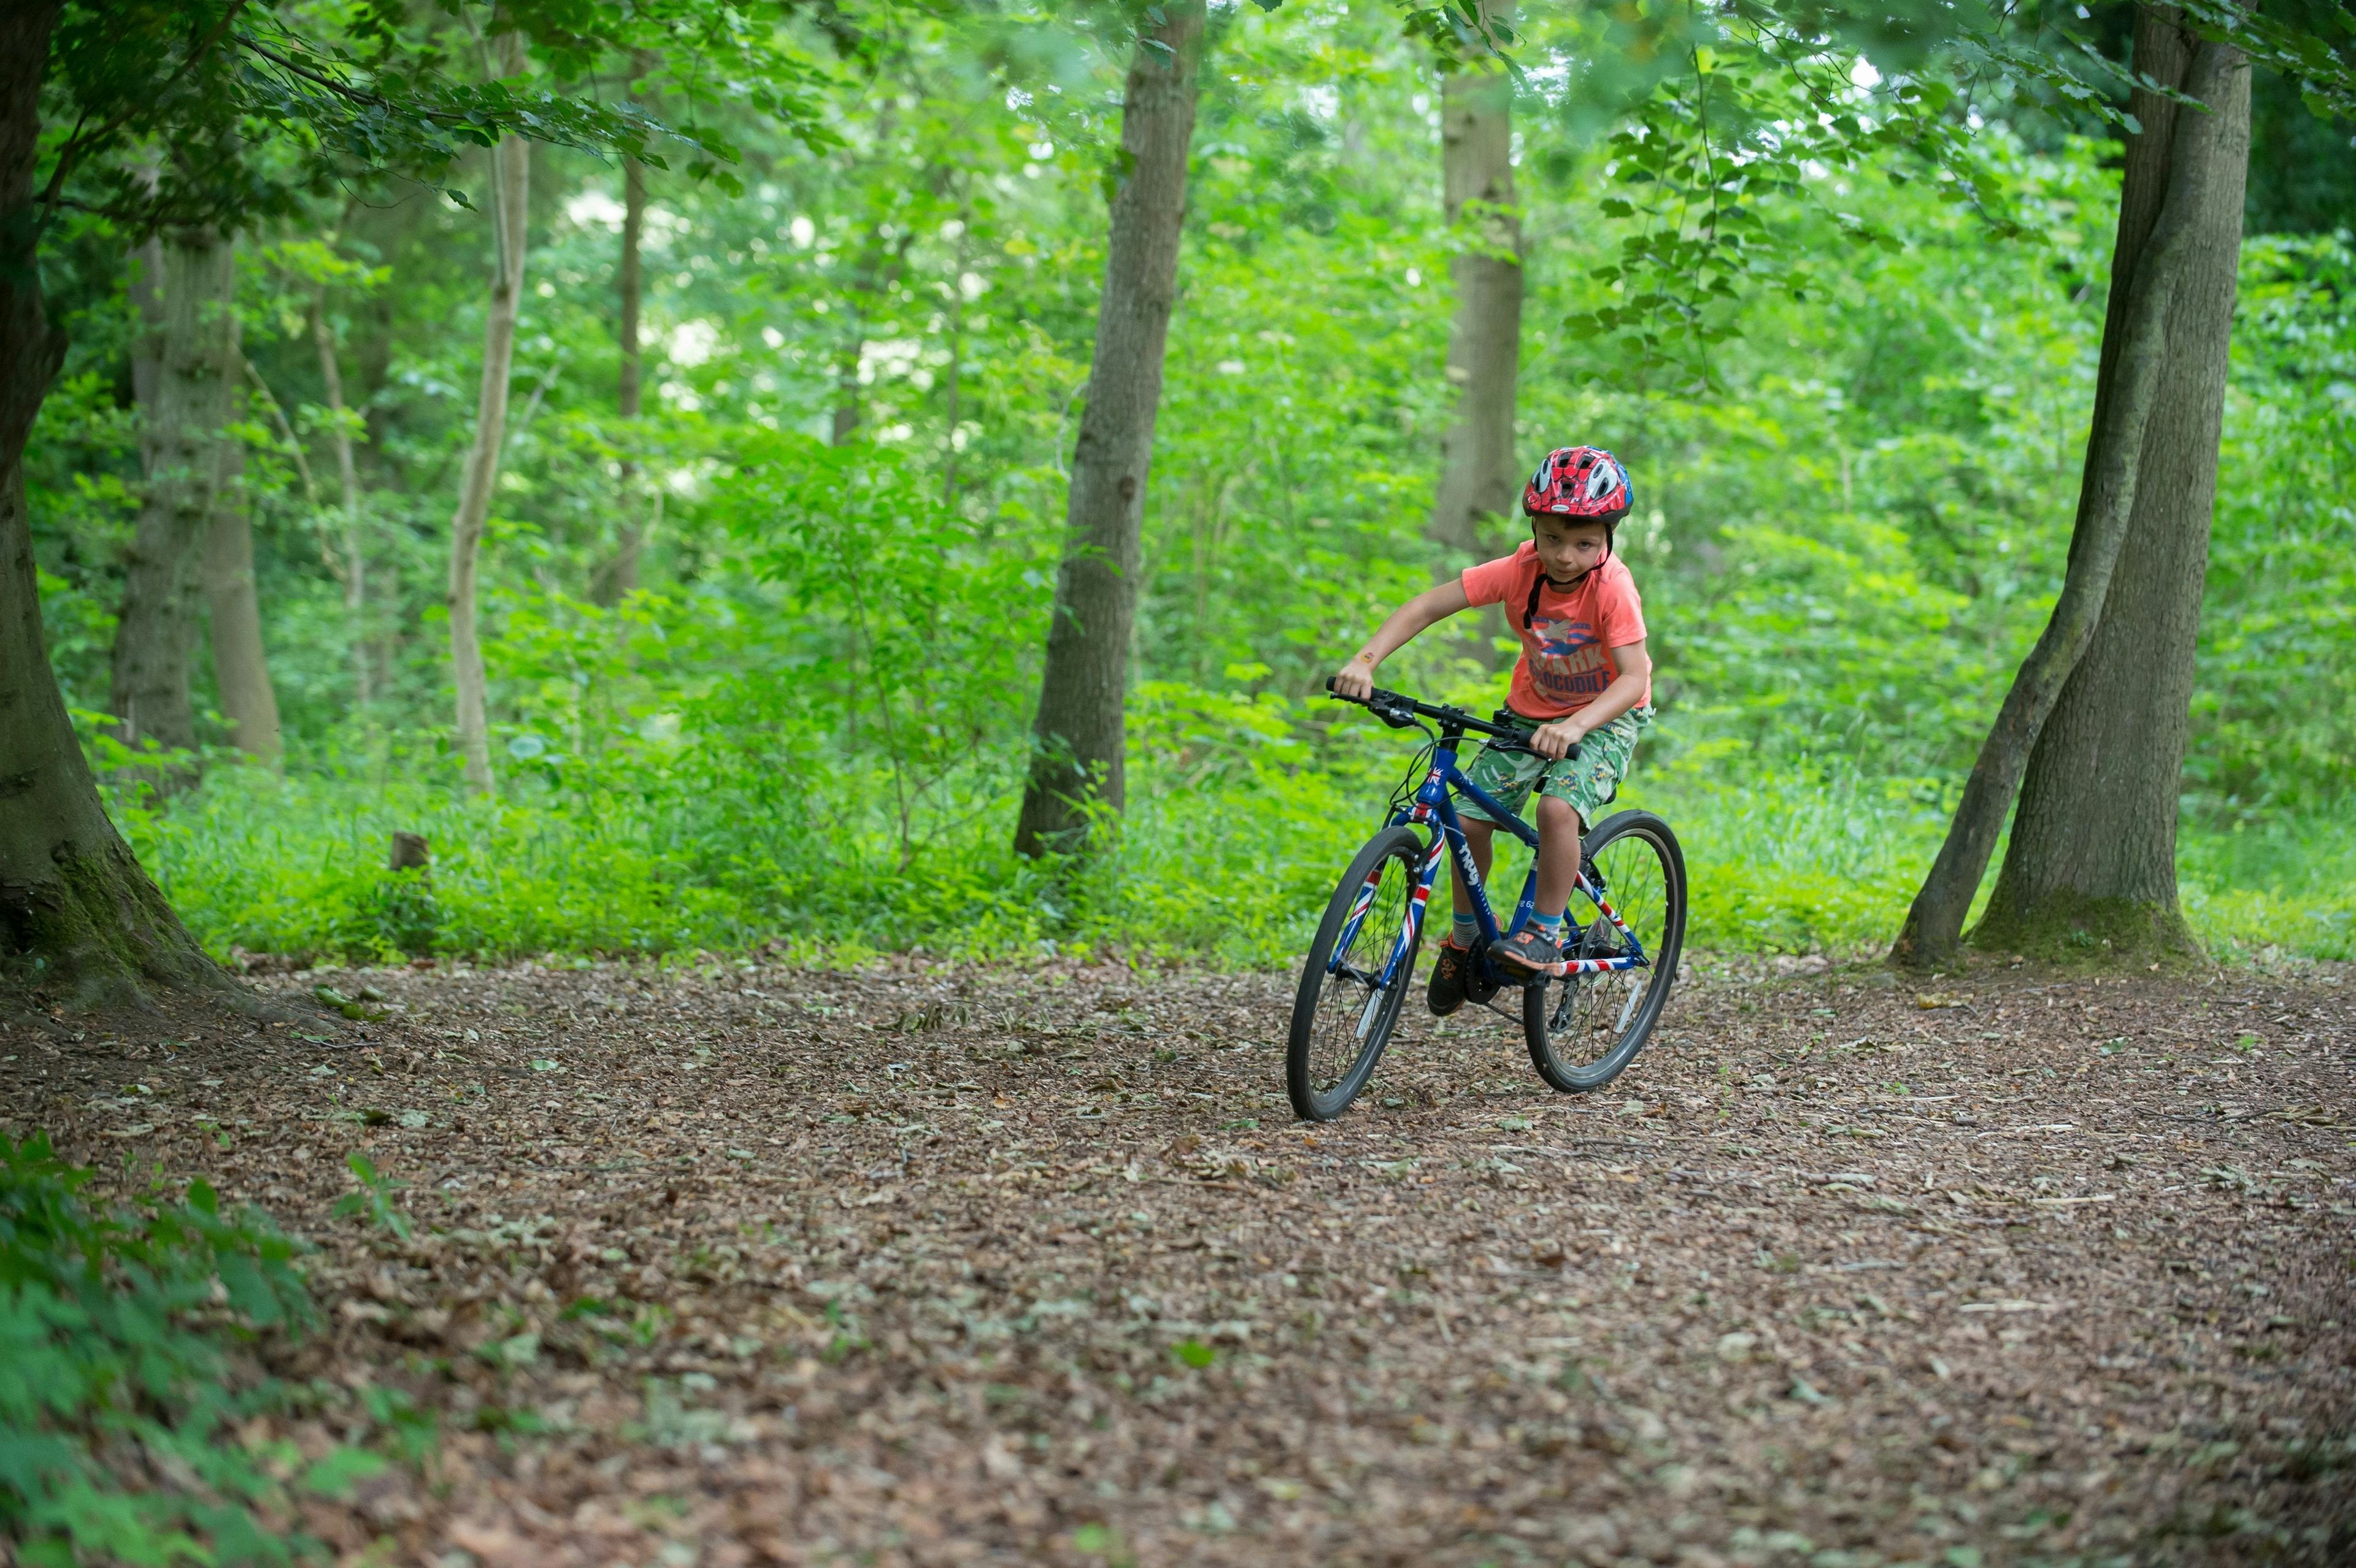 Boy on mountain bike cycling through forest